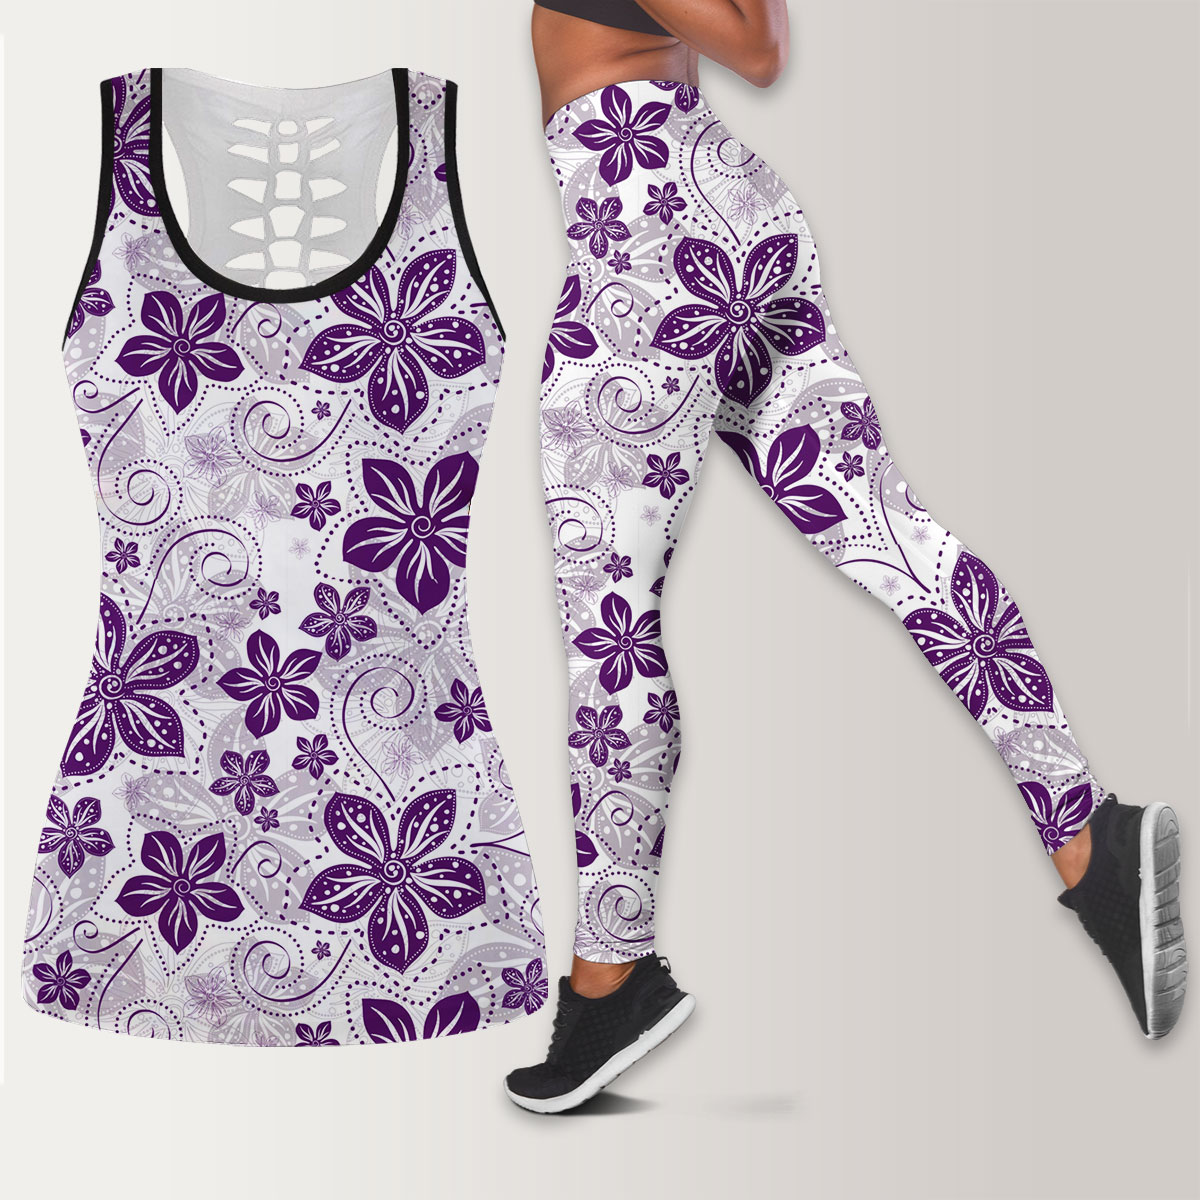 White Violet Floral Pattern Legging Tank Top set